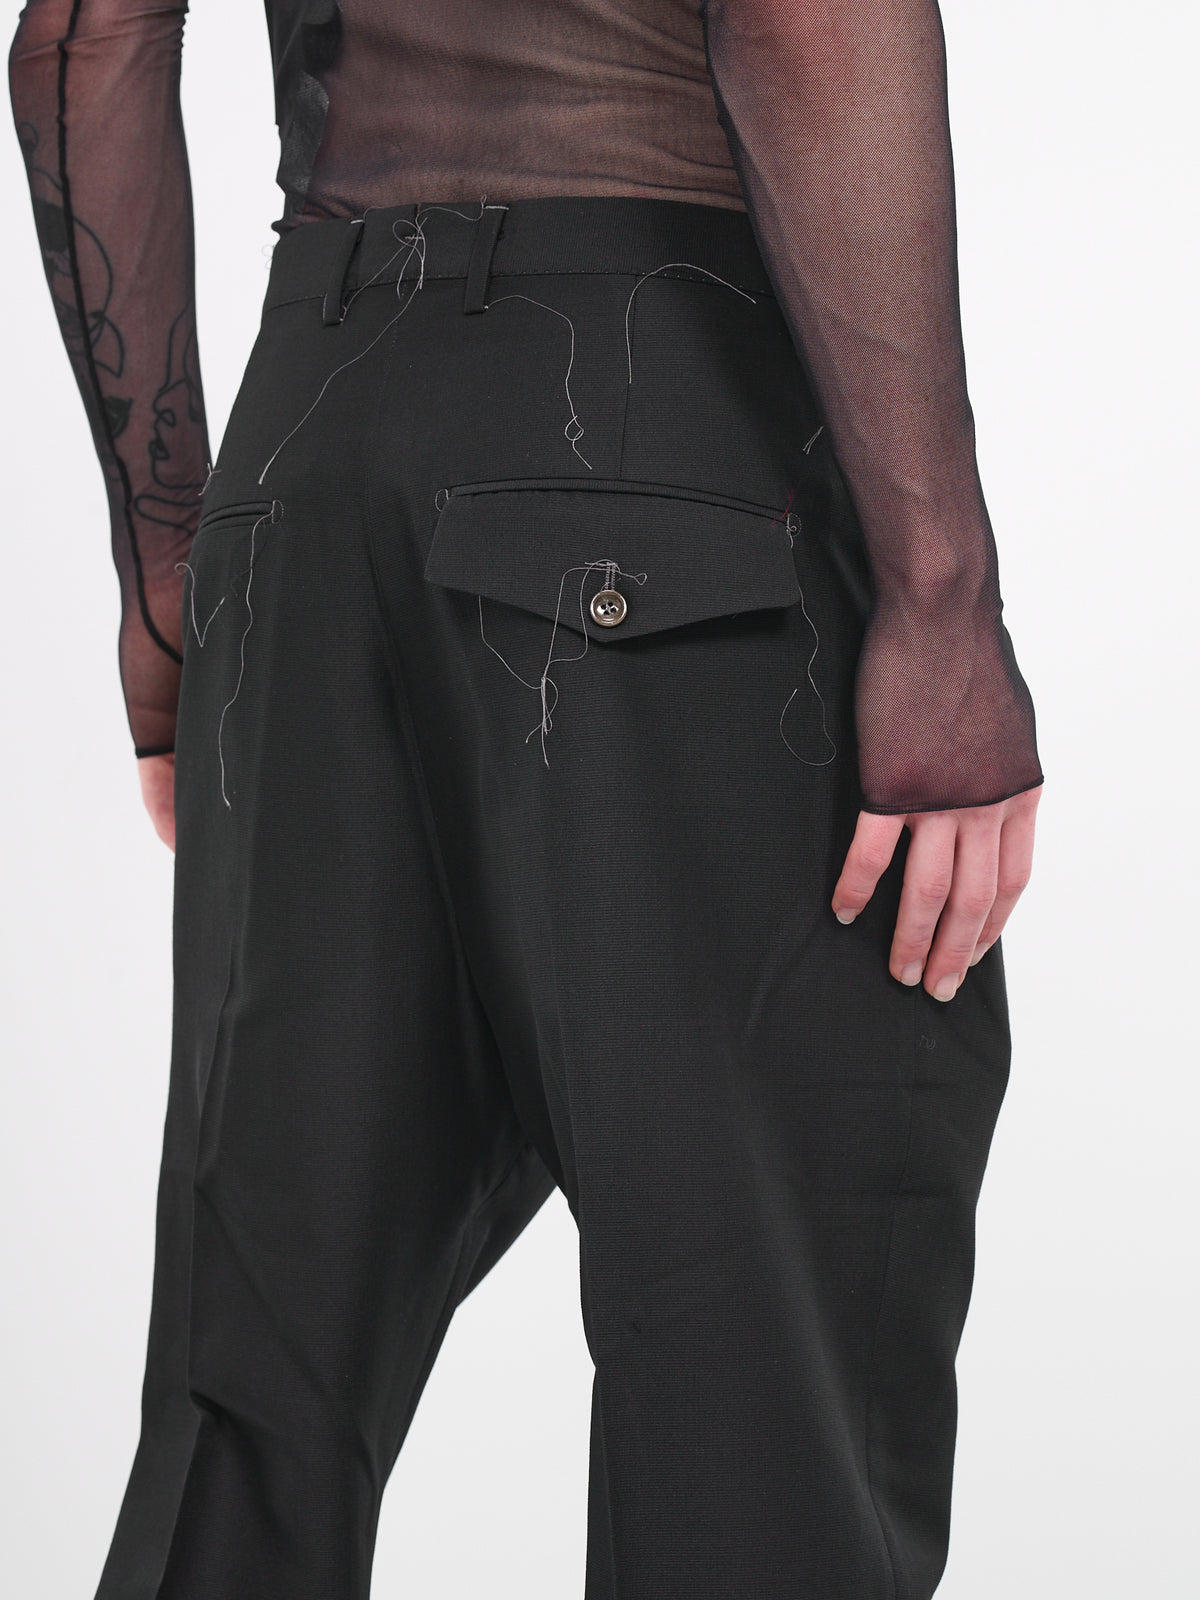 Loose Thread Trousers (PT1001-BLACK)